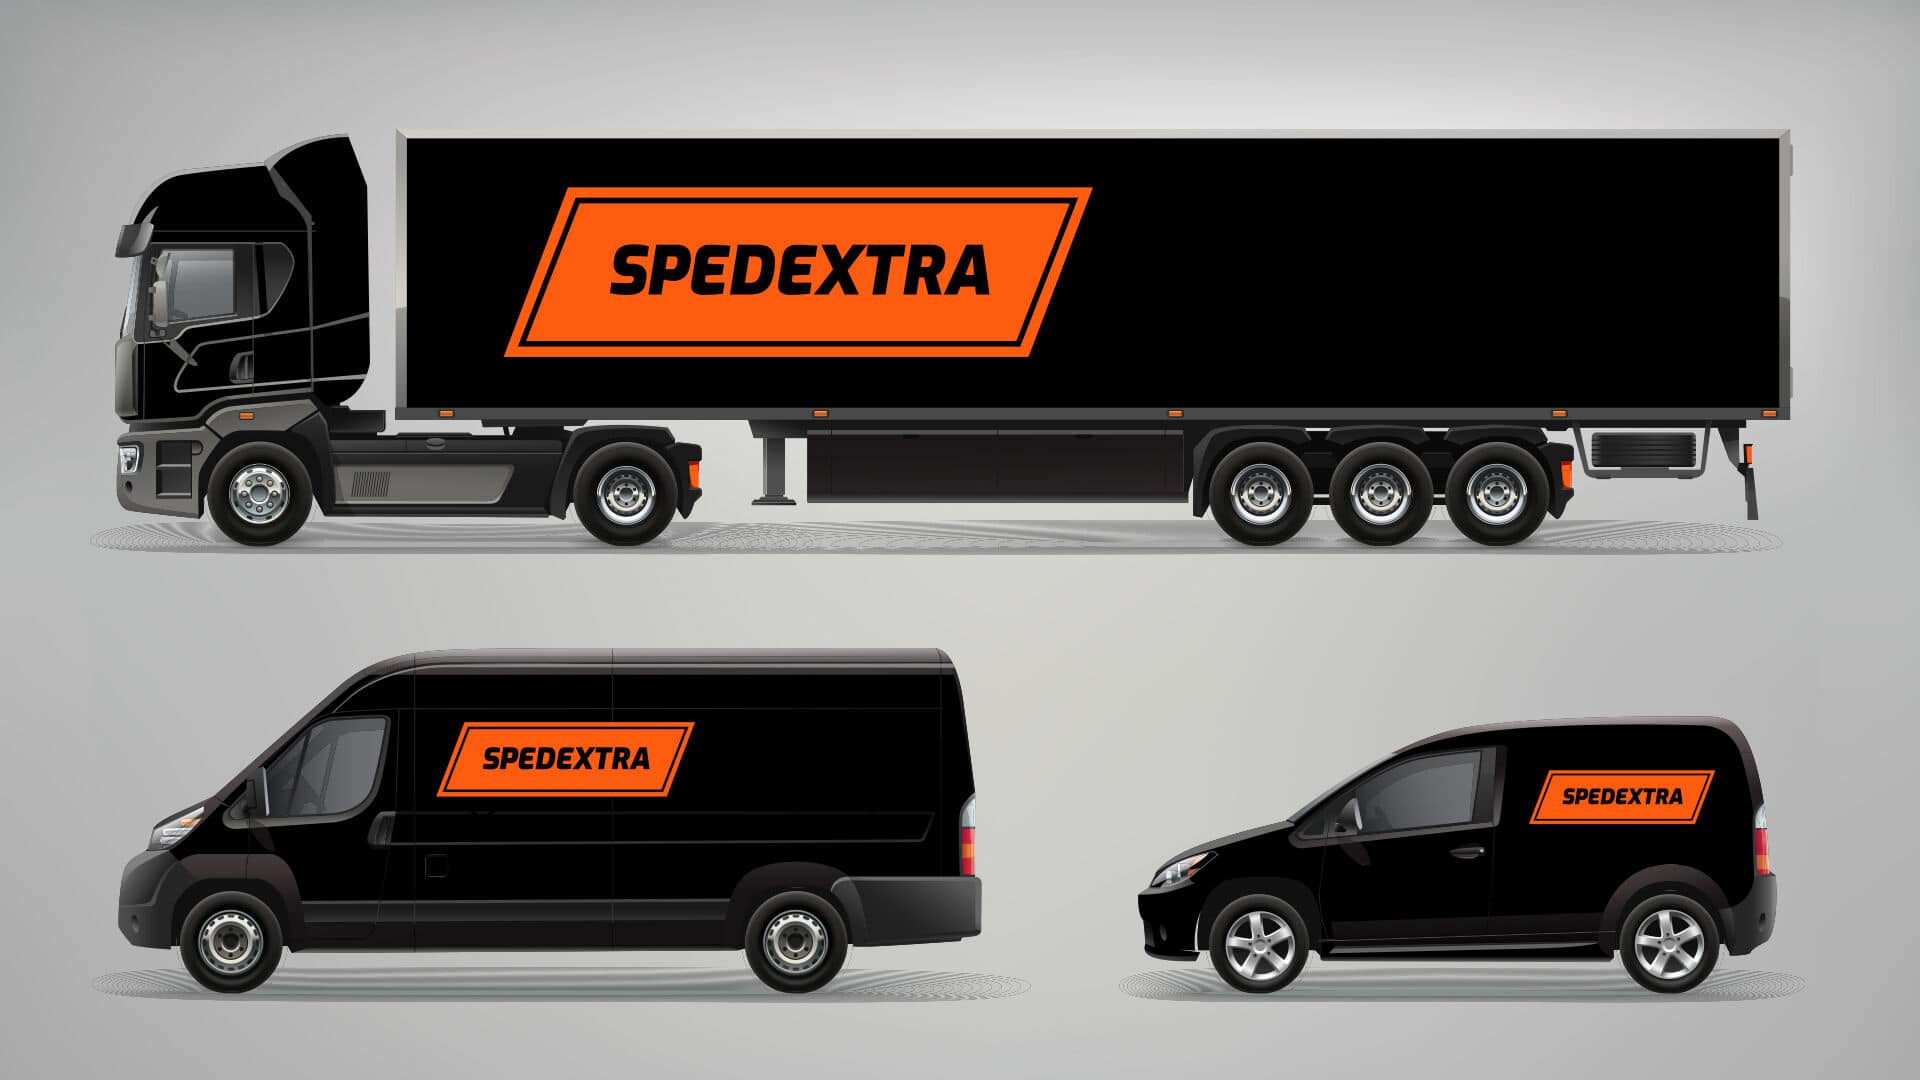 Tvorba loga a vizuální identity Spedextra polep auta